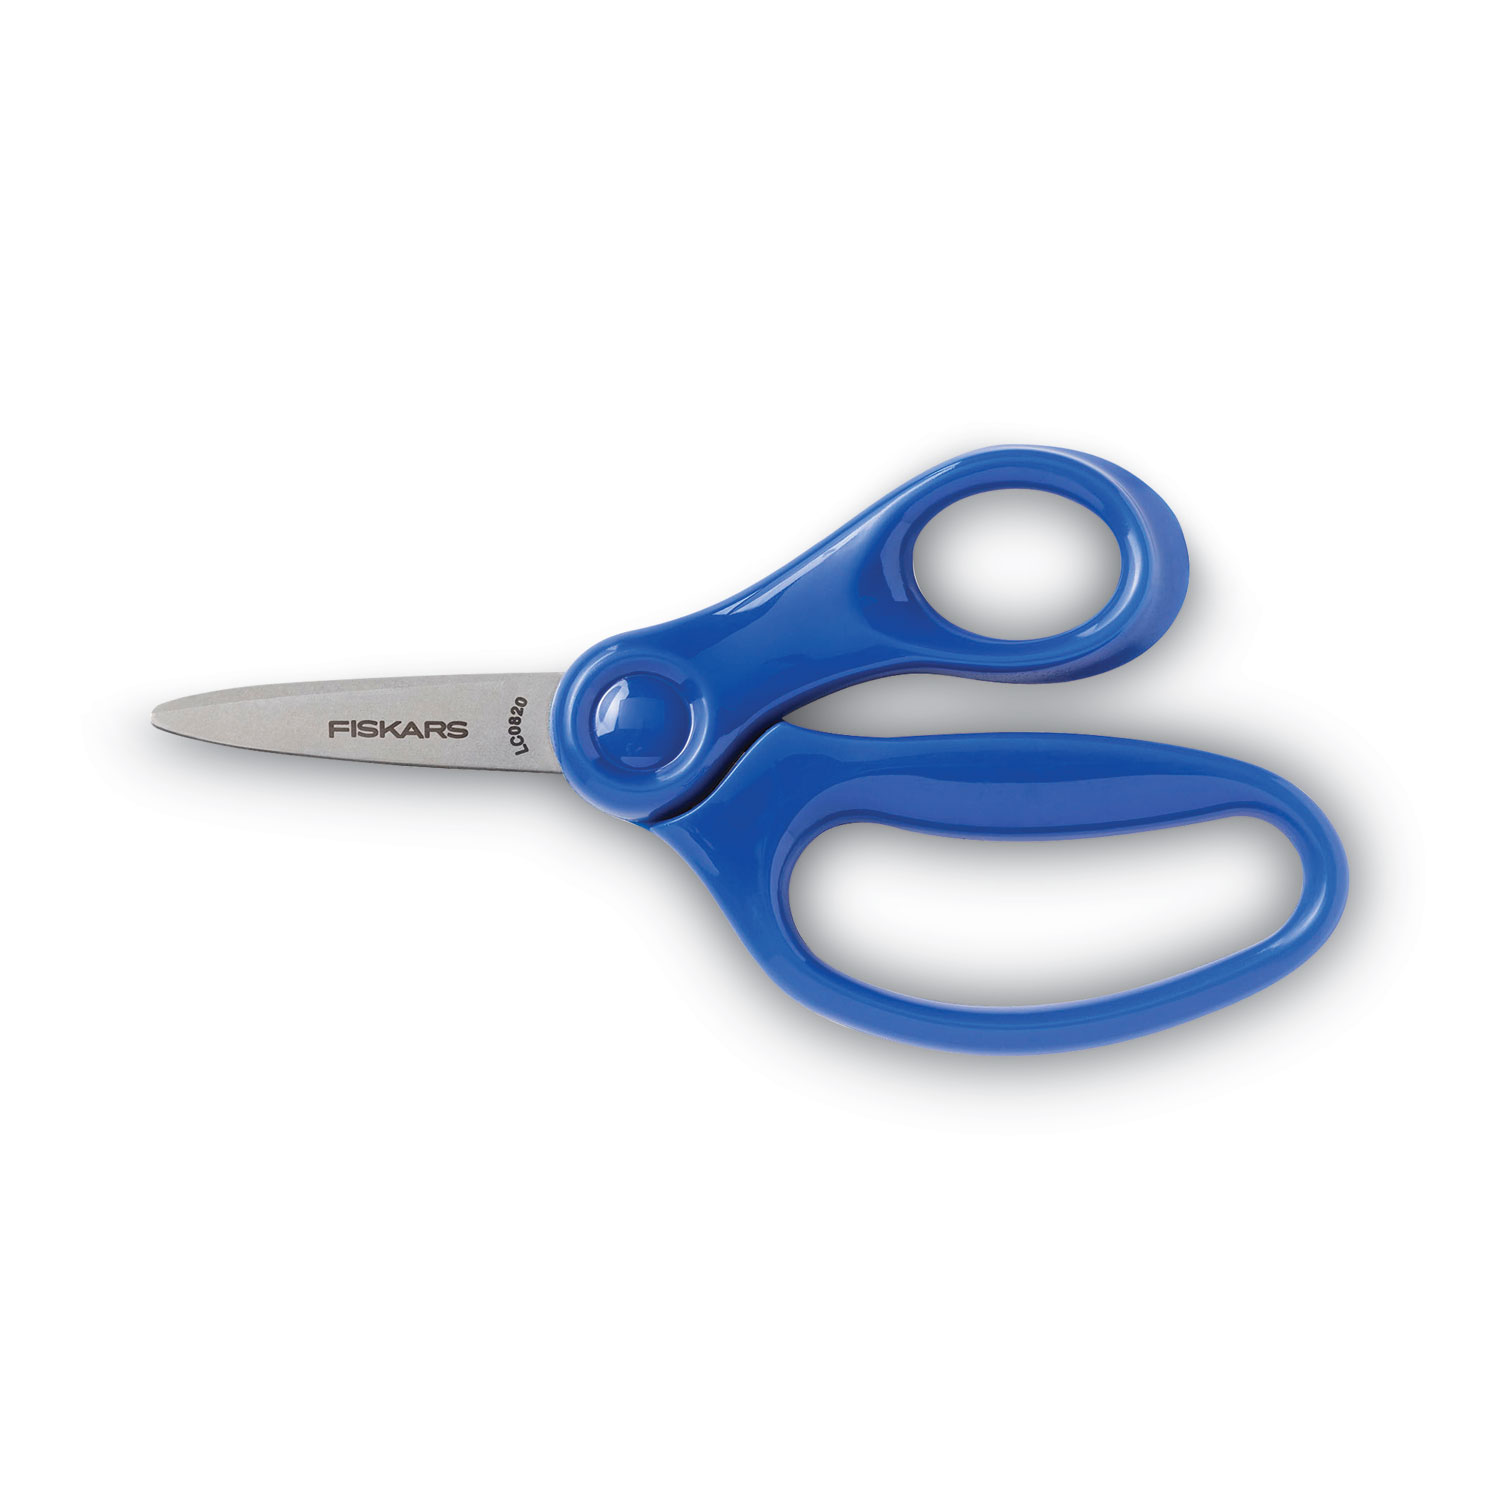 Fiskars Folding Travel Scissors – PASADENA VACUUM & SEWING